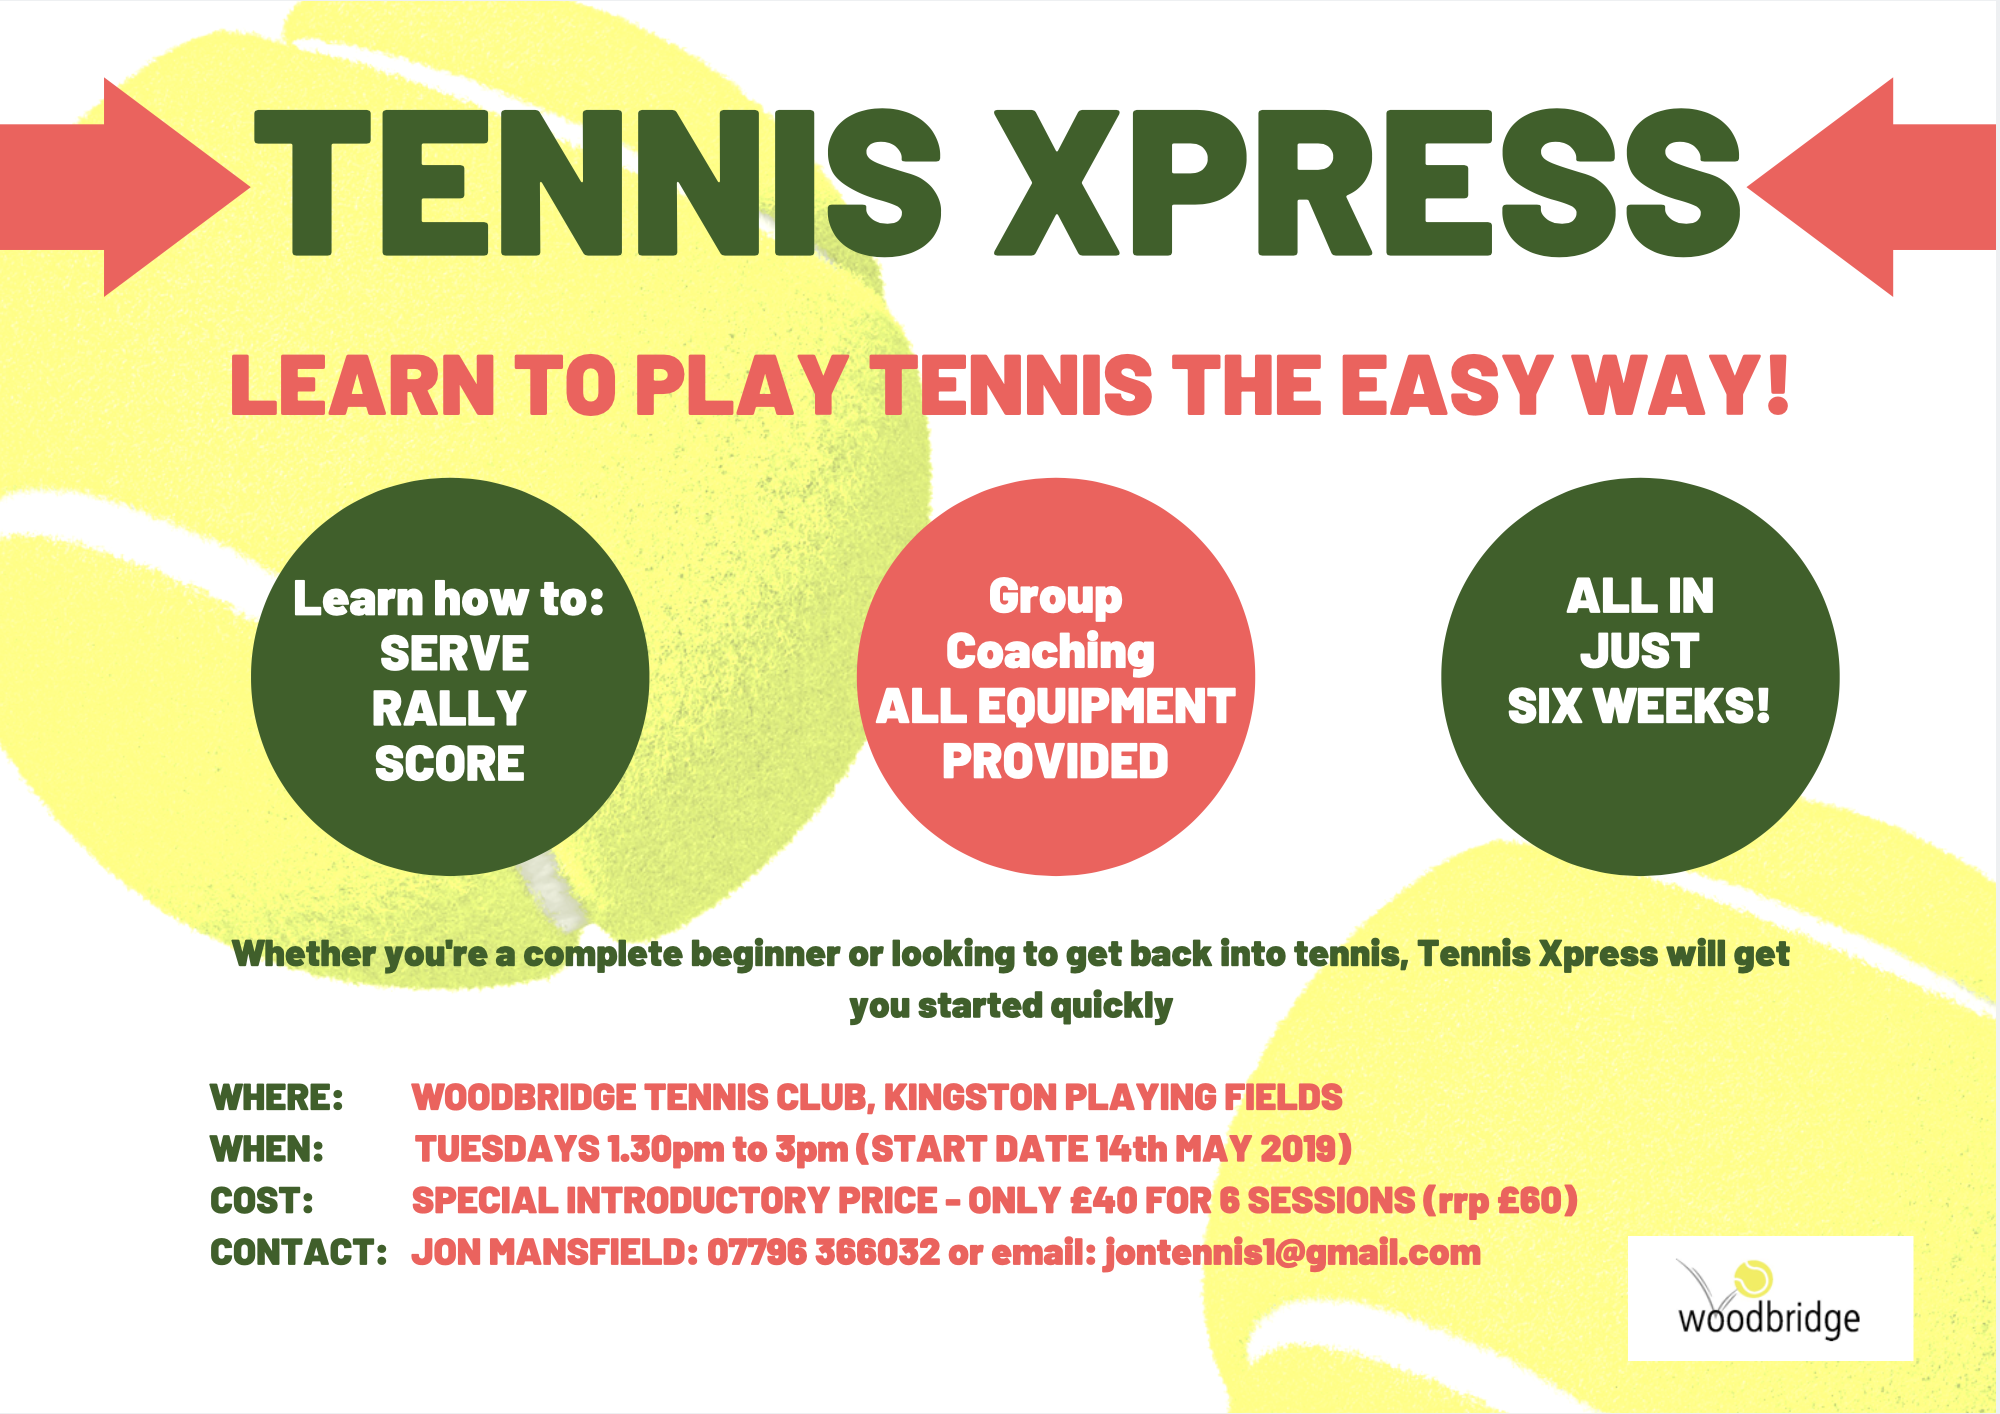 Tennis Xpress at Woodbridge Tennis Club in Suffolk